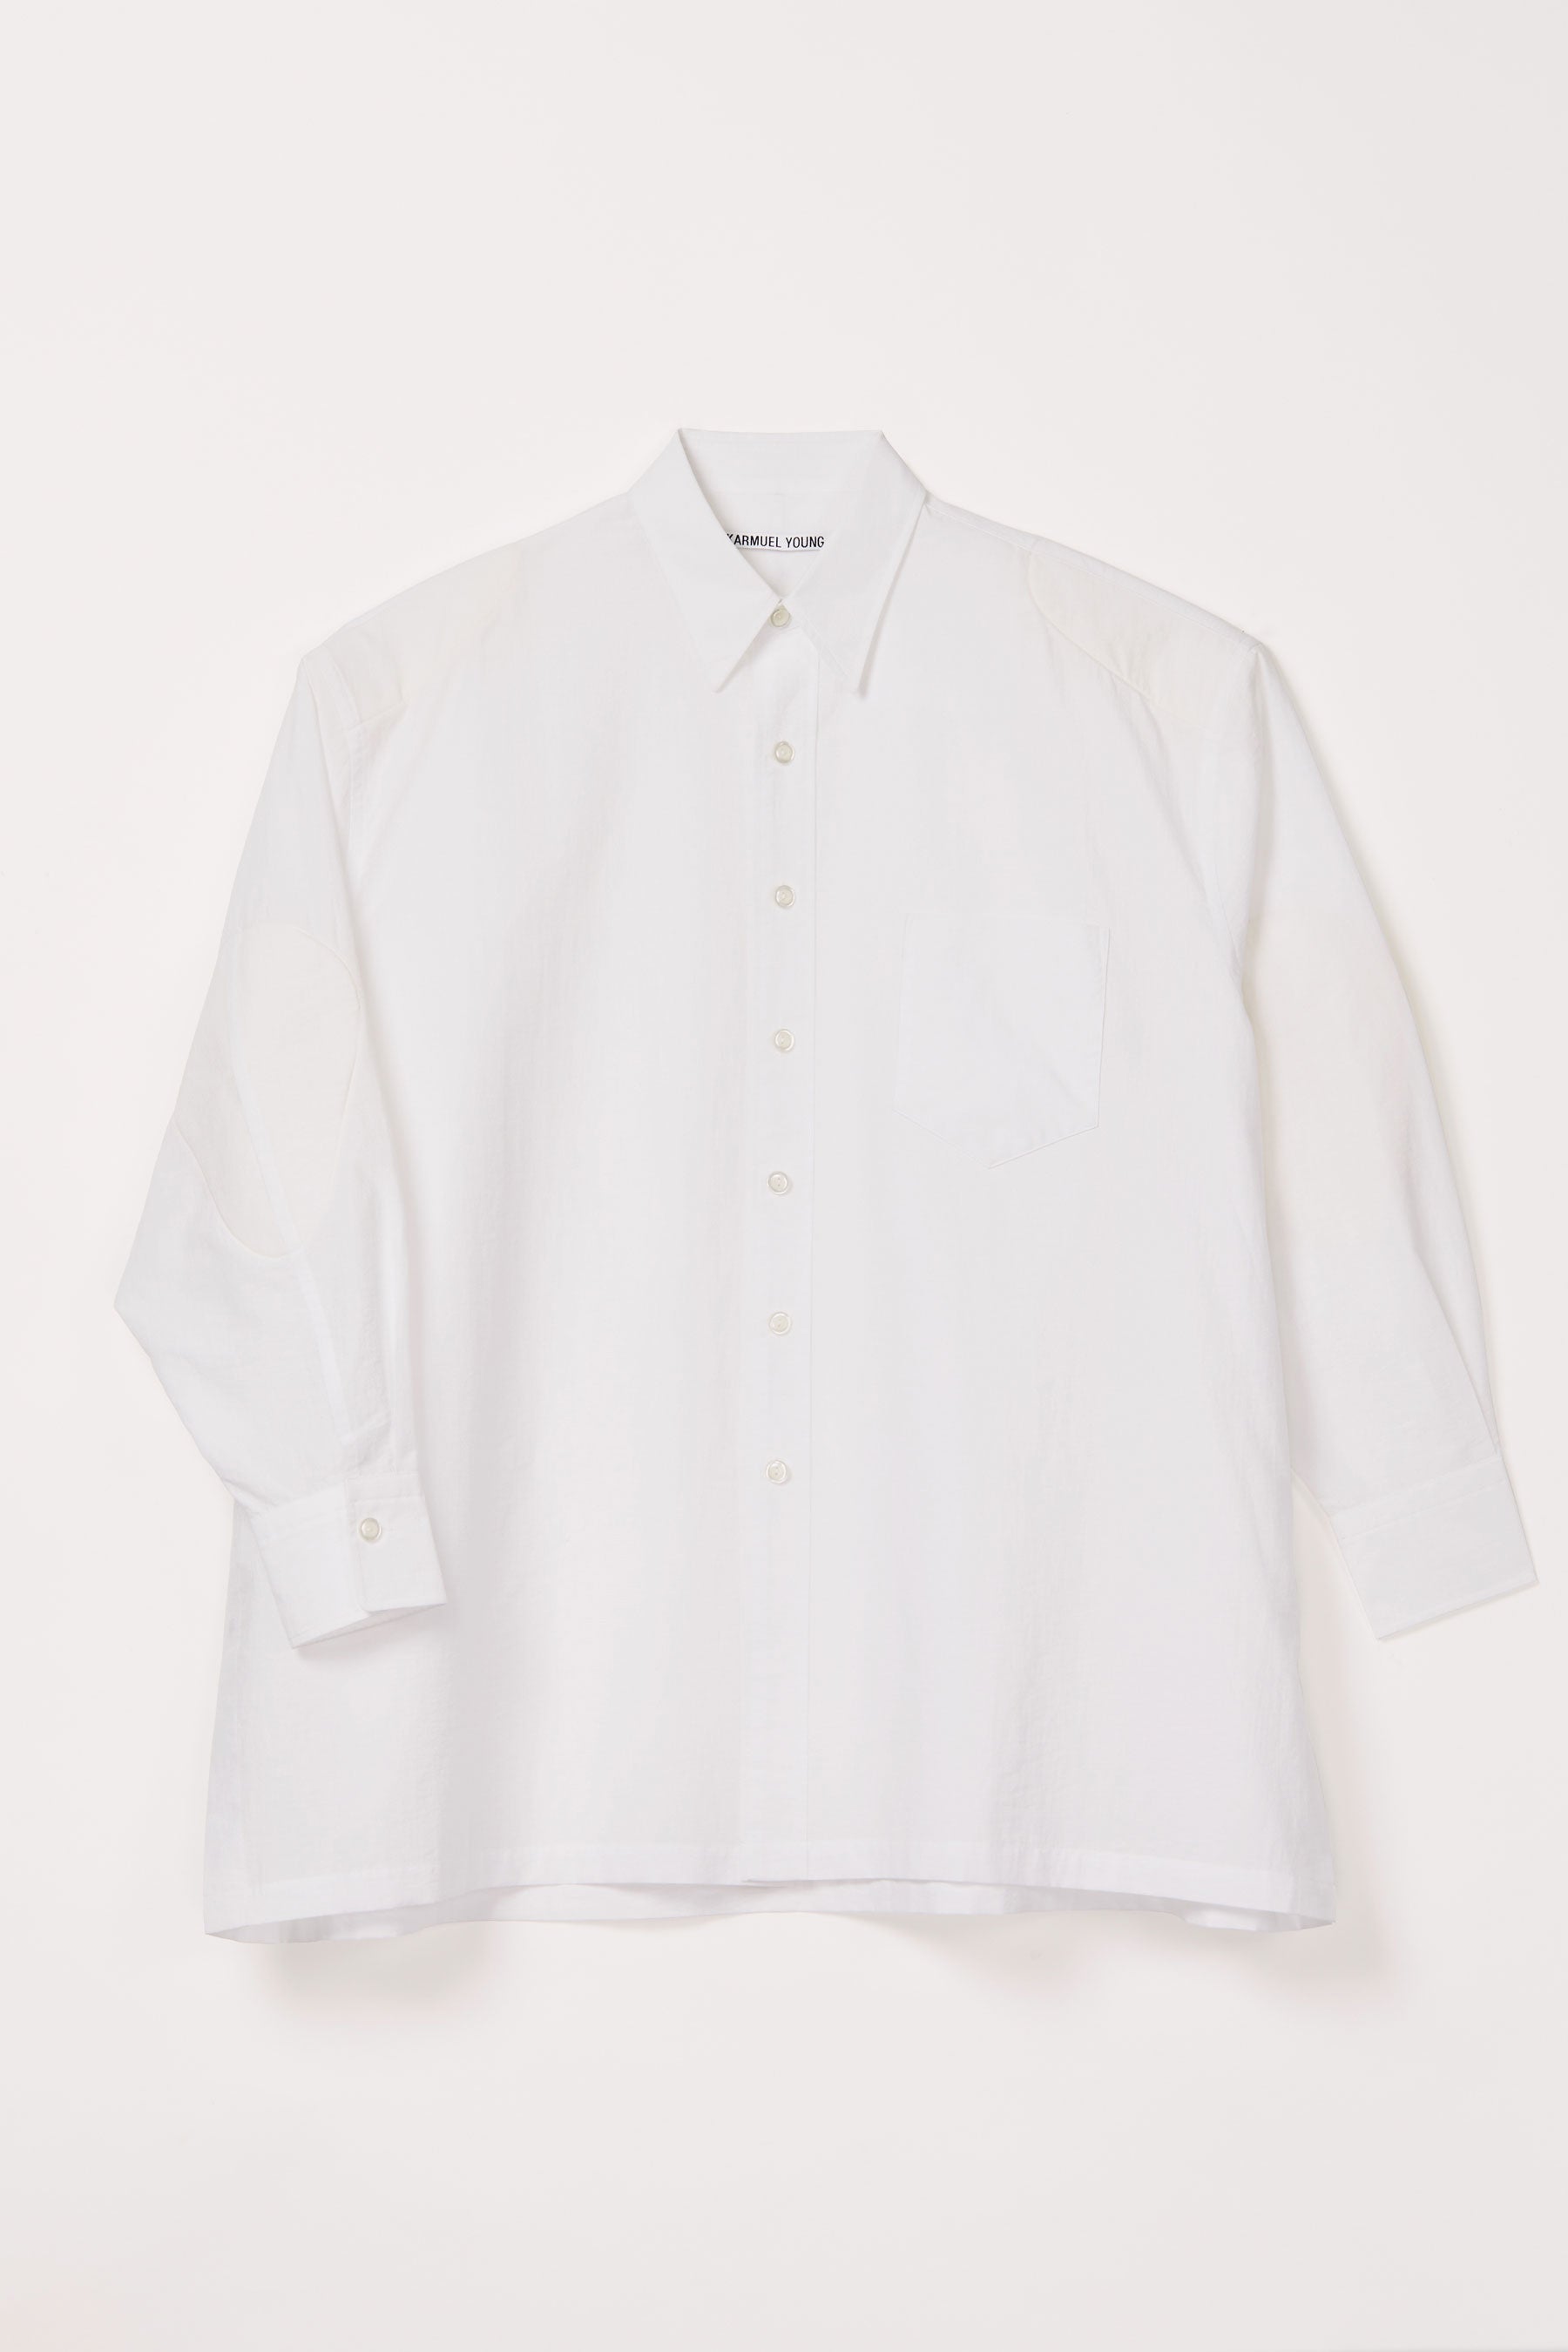 White Cotton Strong Arm Shirt Coat